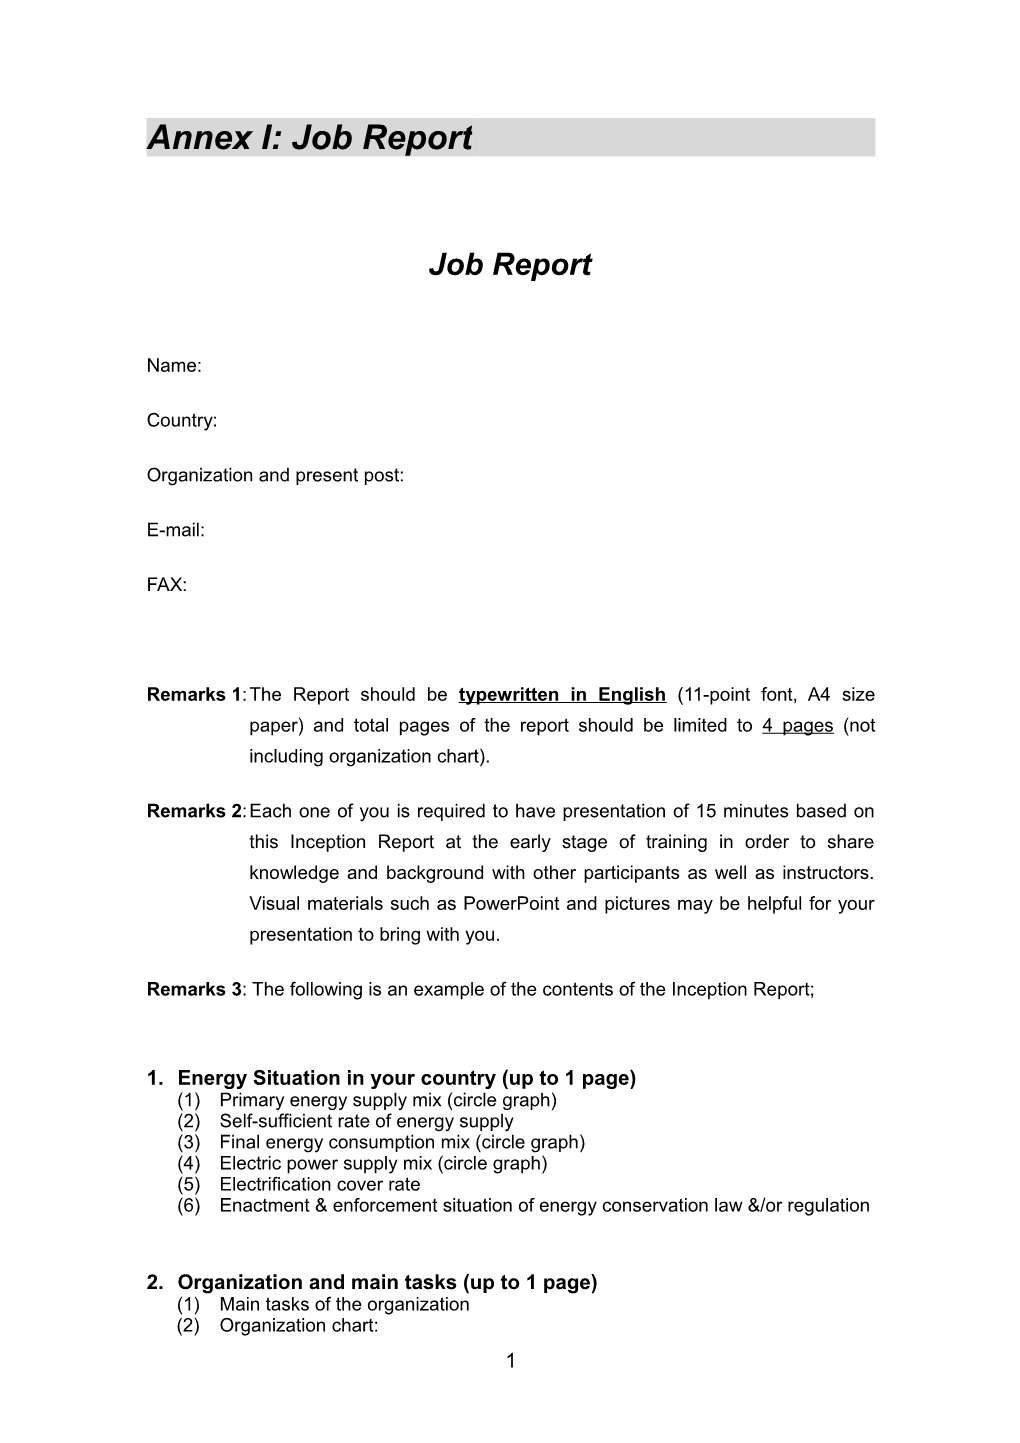 Annex I: Job Report